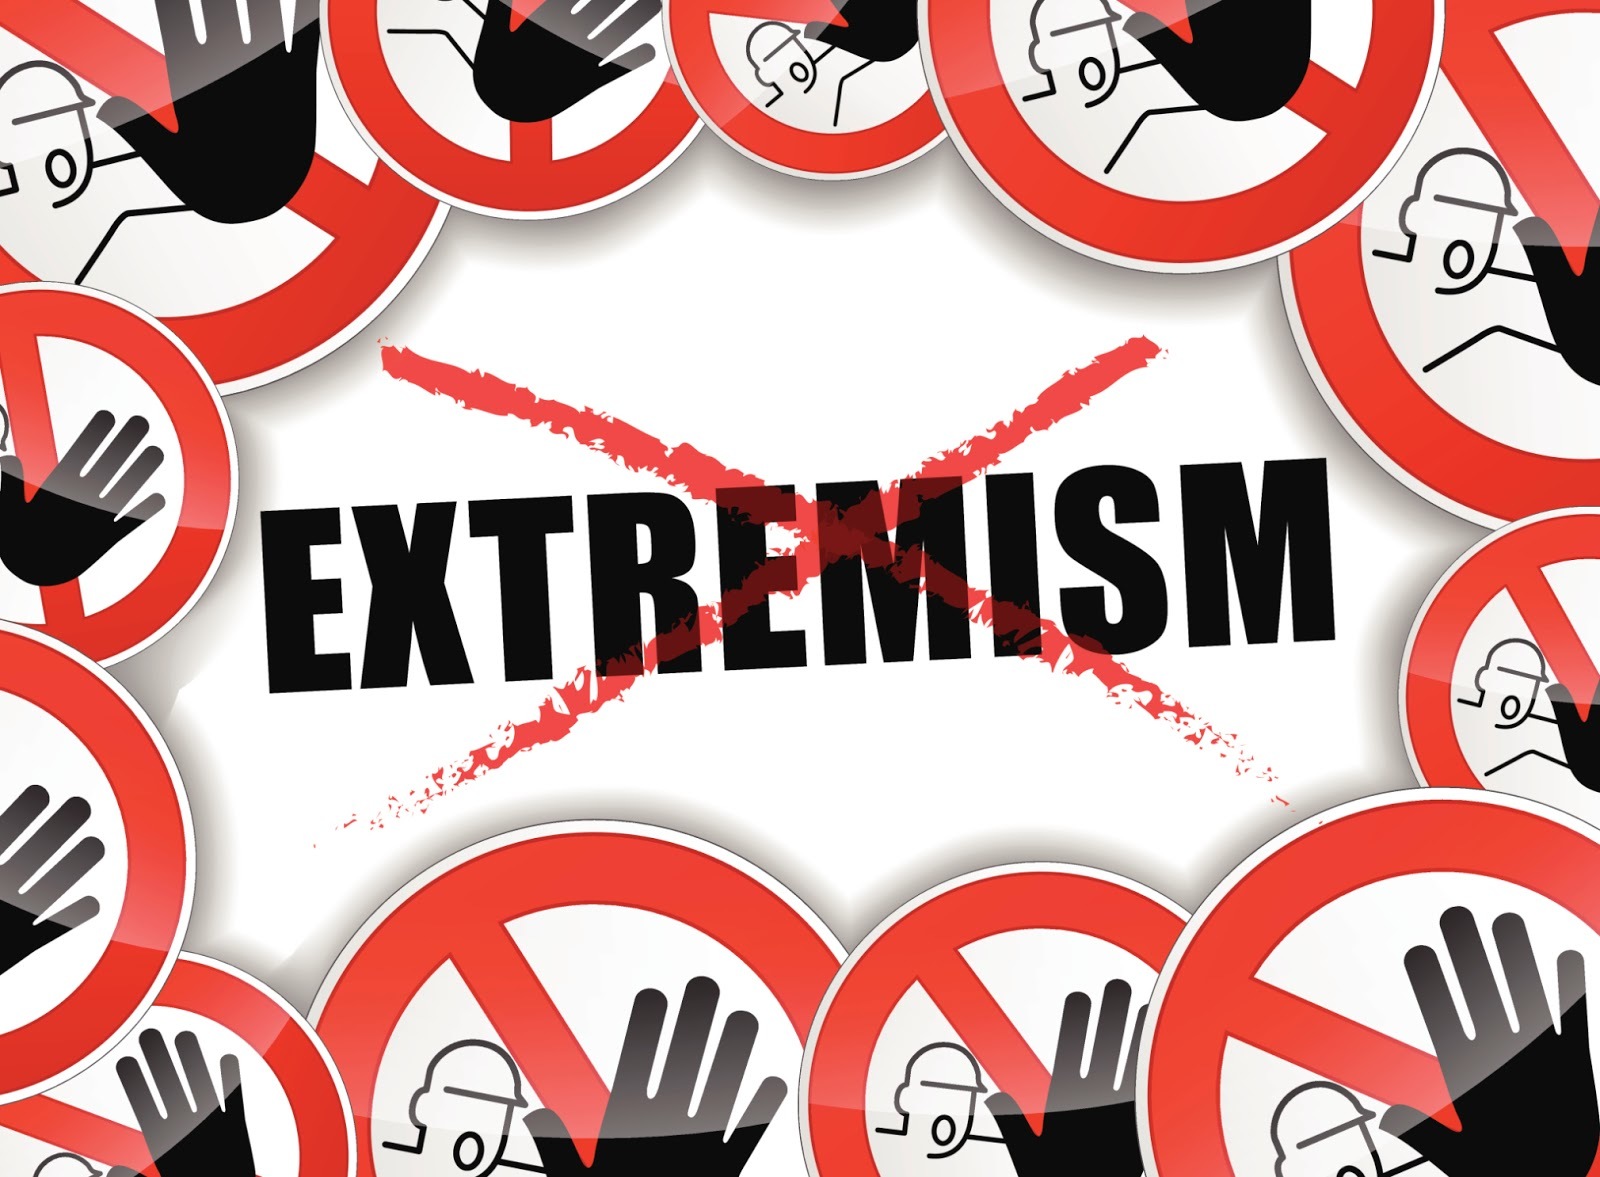 Violent extremism